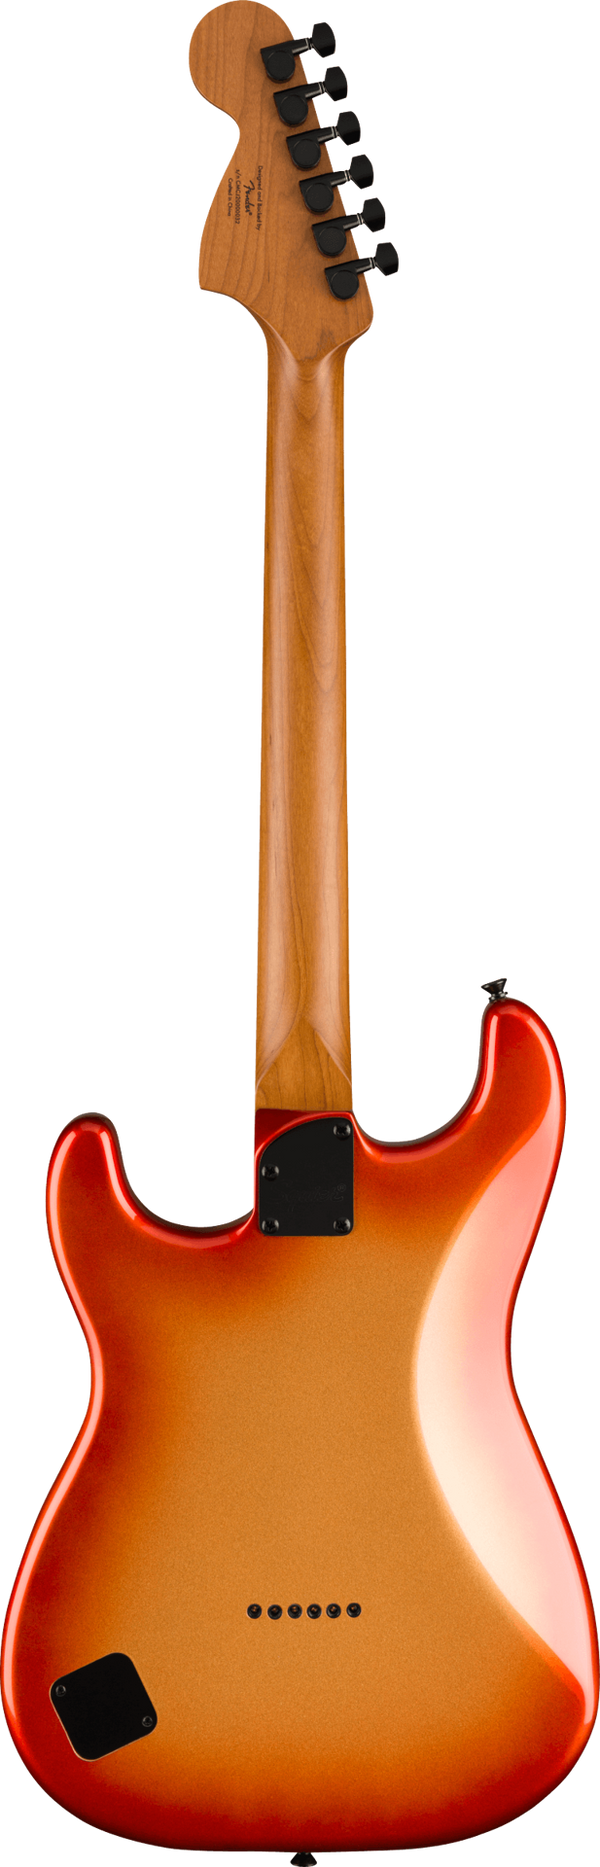 Squier Contemporary Stratocaster Special HT Laurel Fingerboard Black Pickguard Sunset Metallic